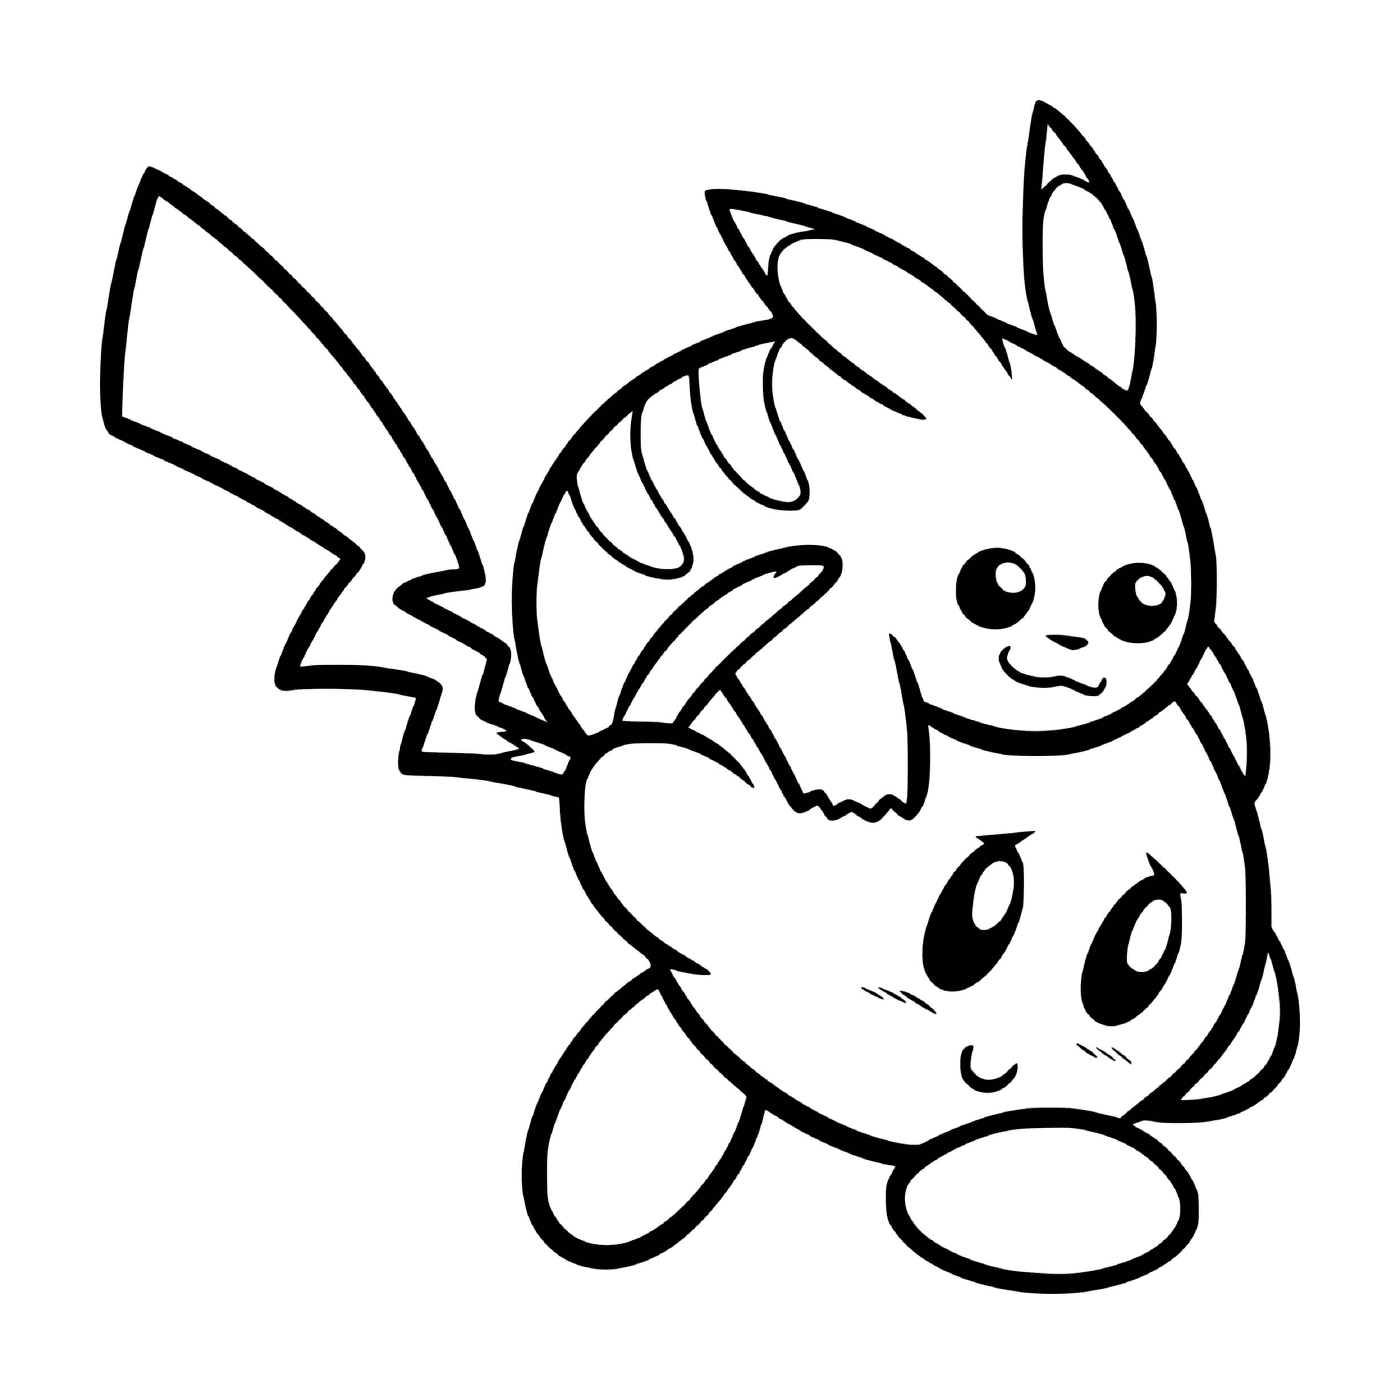  Pikachu jumps on Kirby 